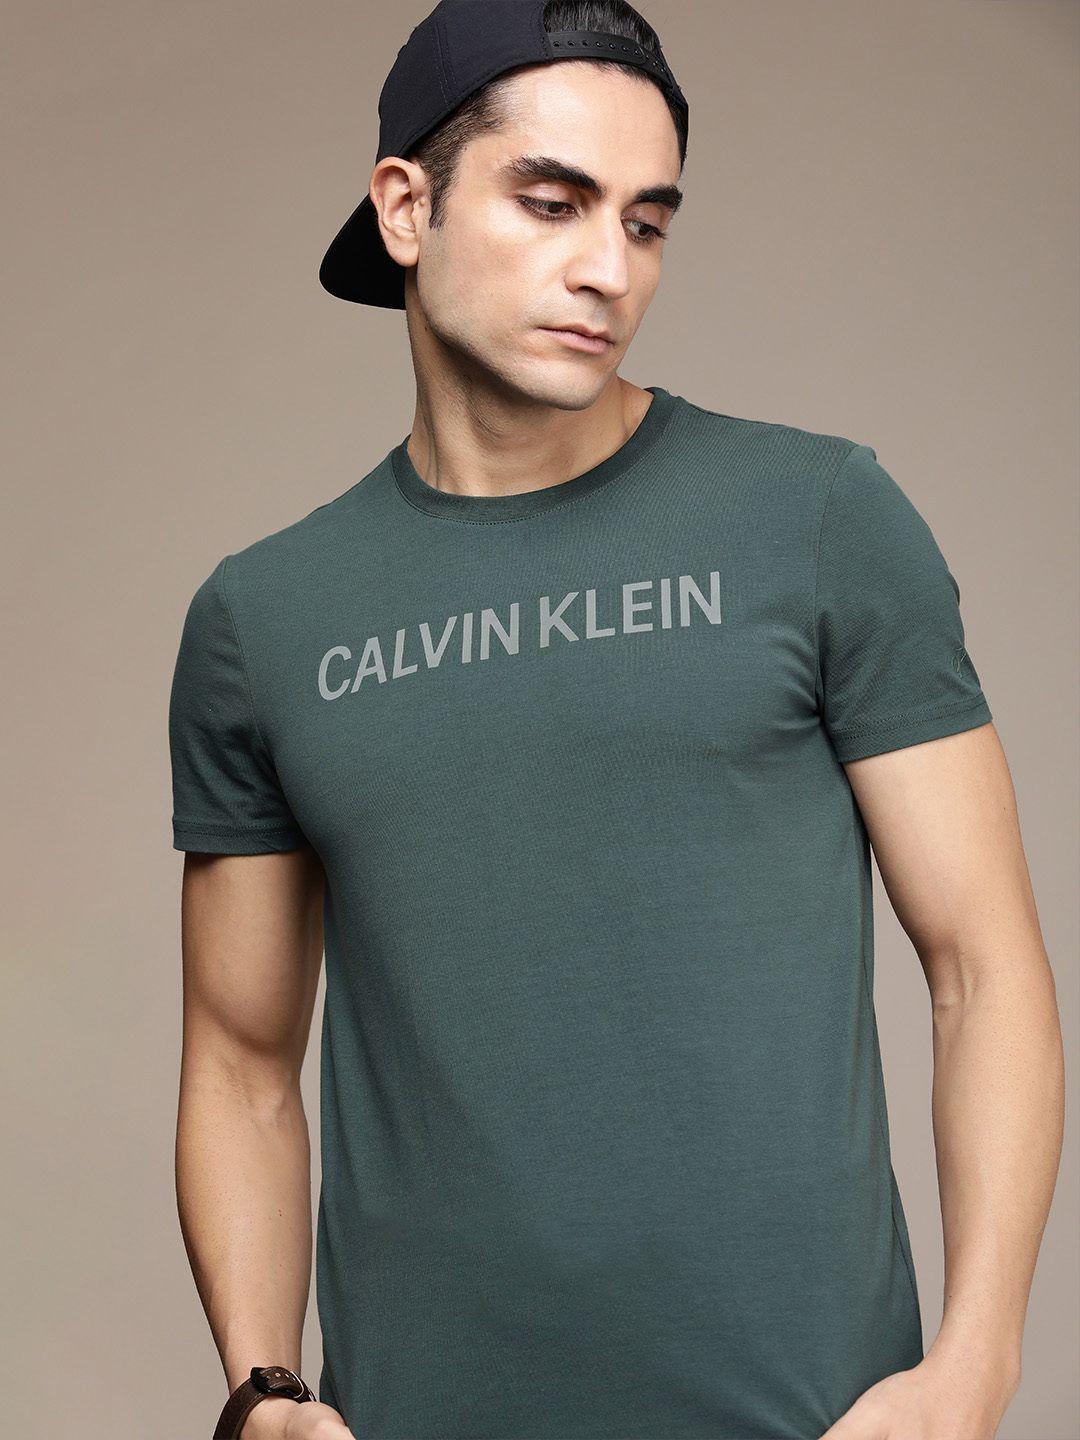 calvin klein jeans men teal blue brand logo printed slim fit t-shirt